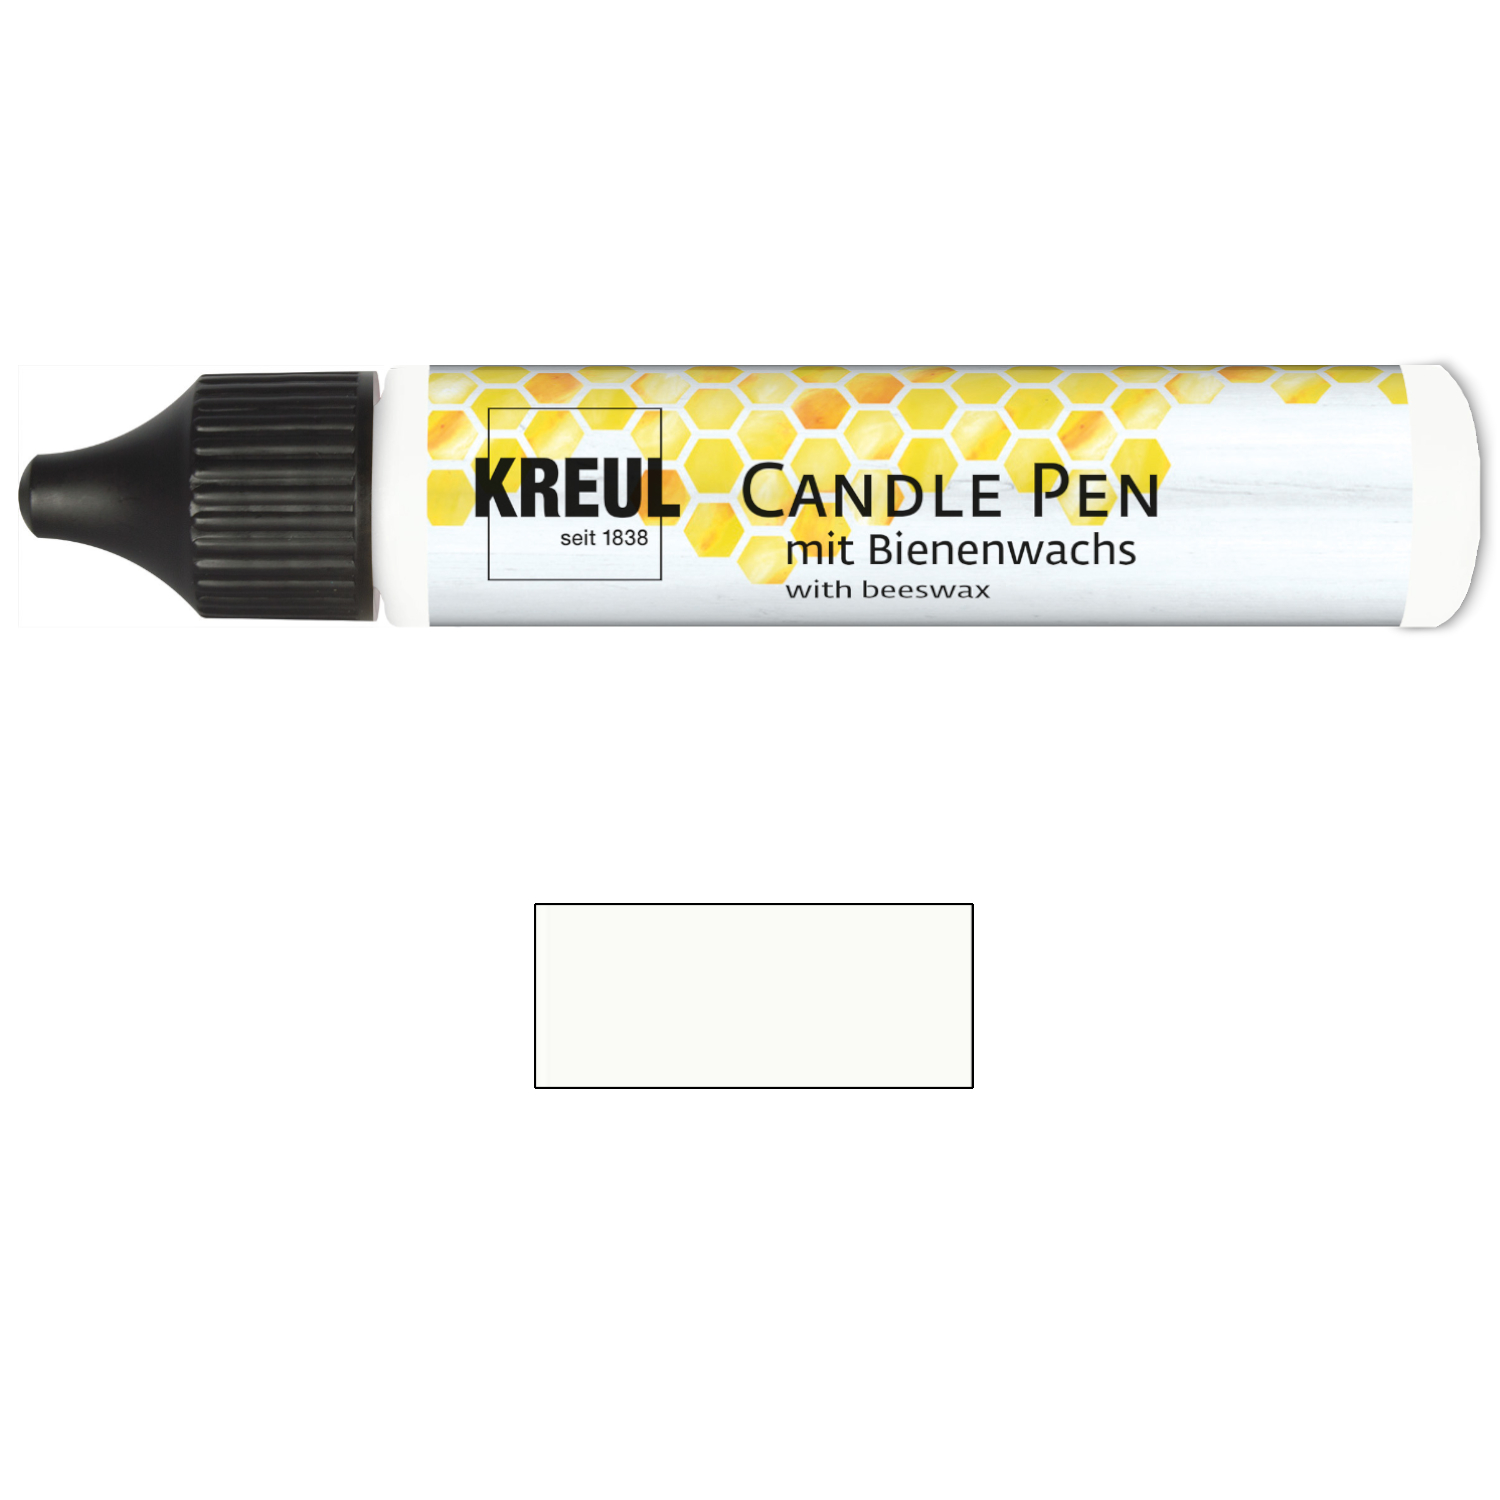 NEU KREUL Candle Pen / Kerzen-Stift, 29ml, Weiß